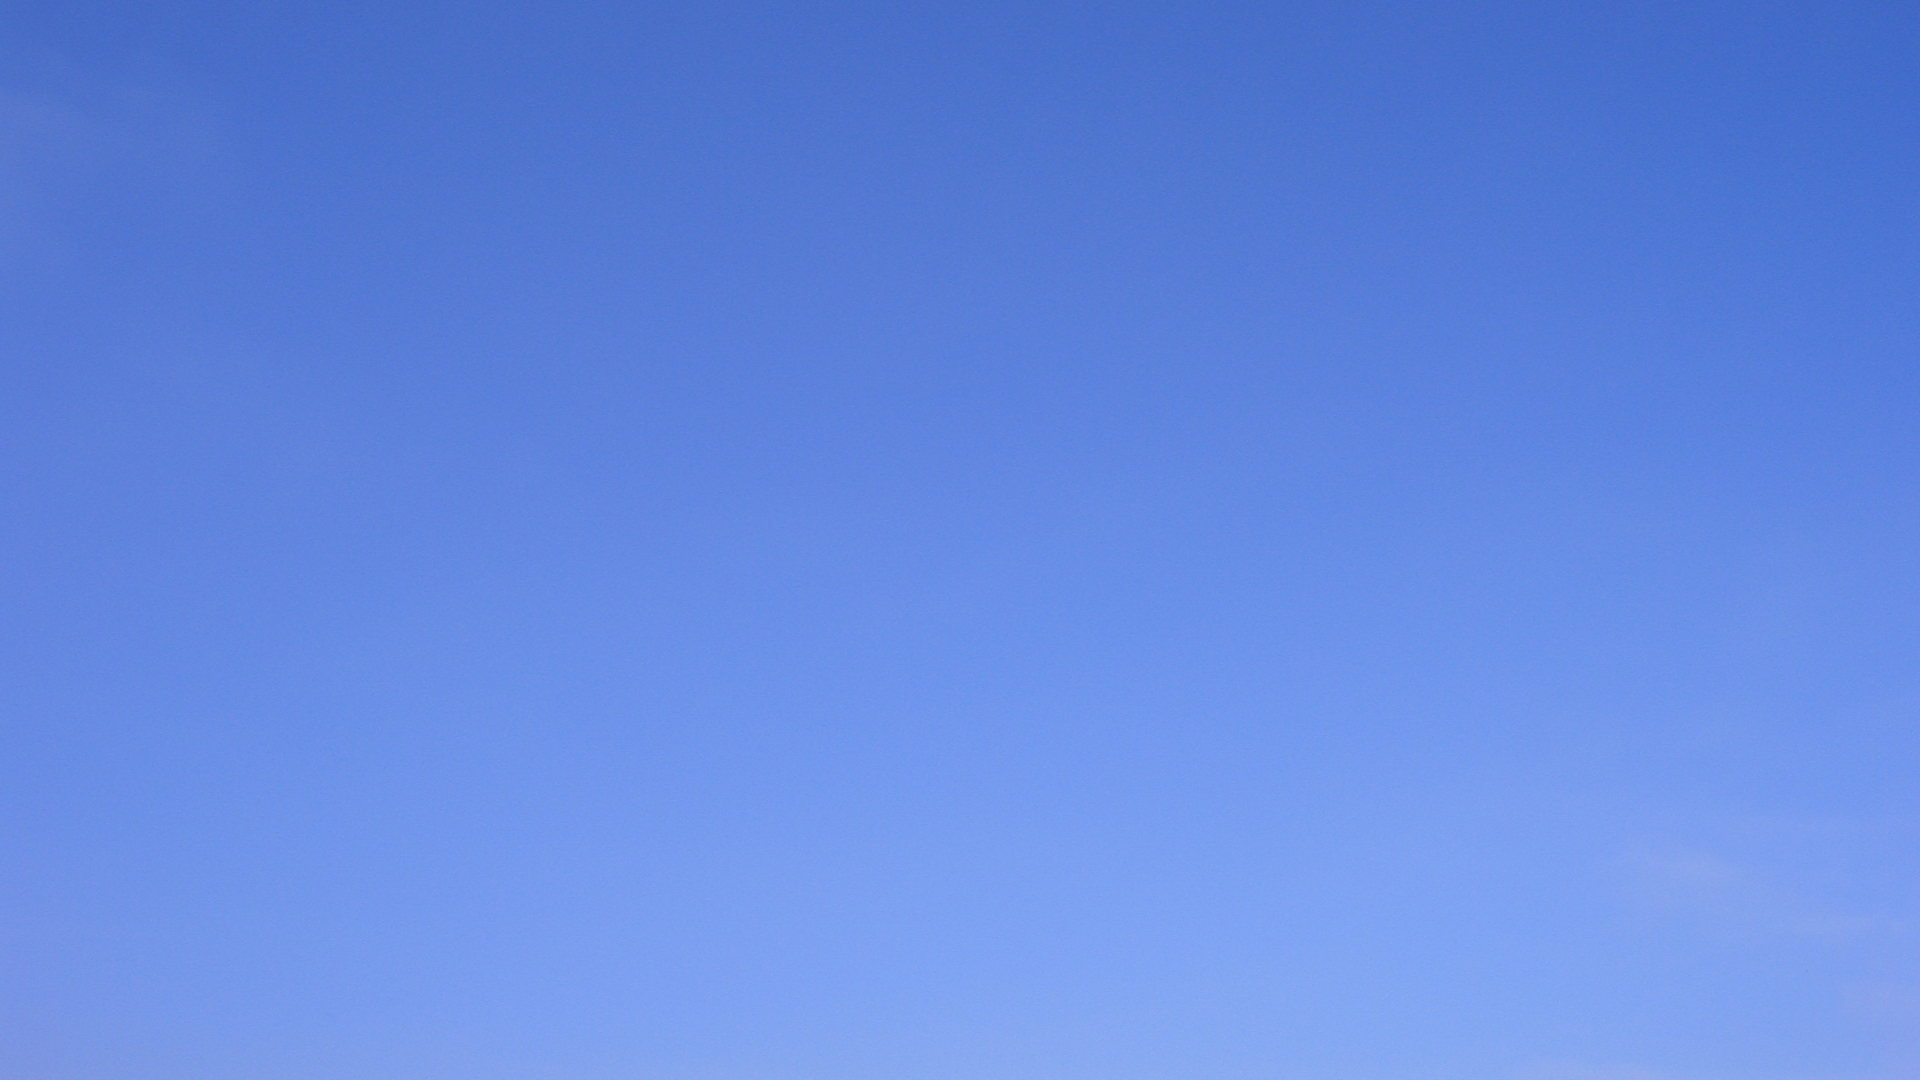 Cielo limpido - Clear sky by MorganCygnus on DeviantArt